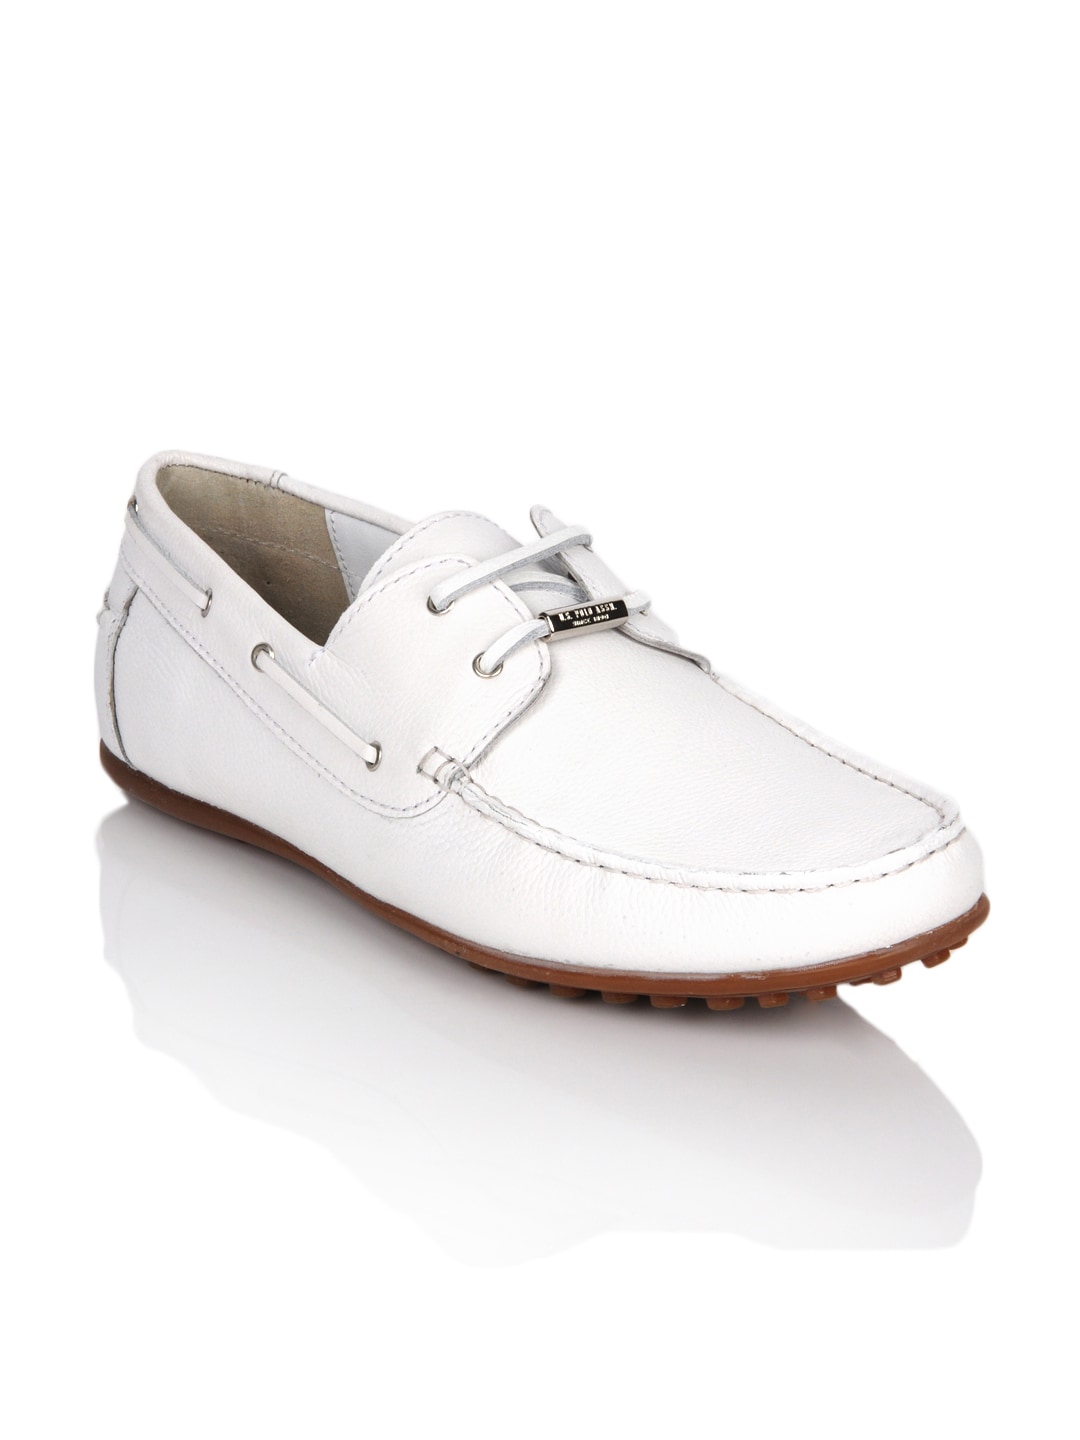 U.S. Polo Assn. Men Casual White Casual Shoes